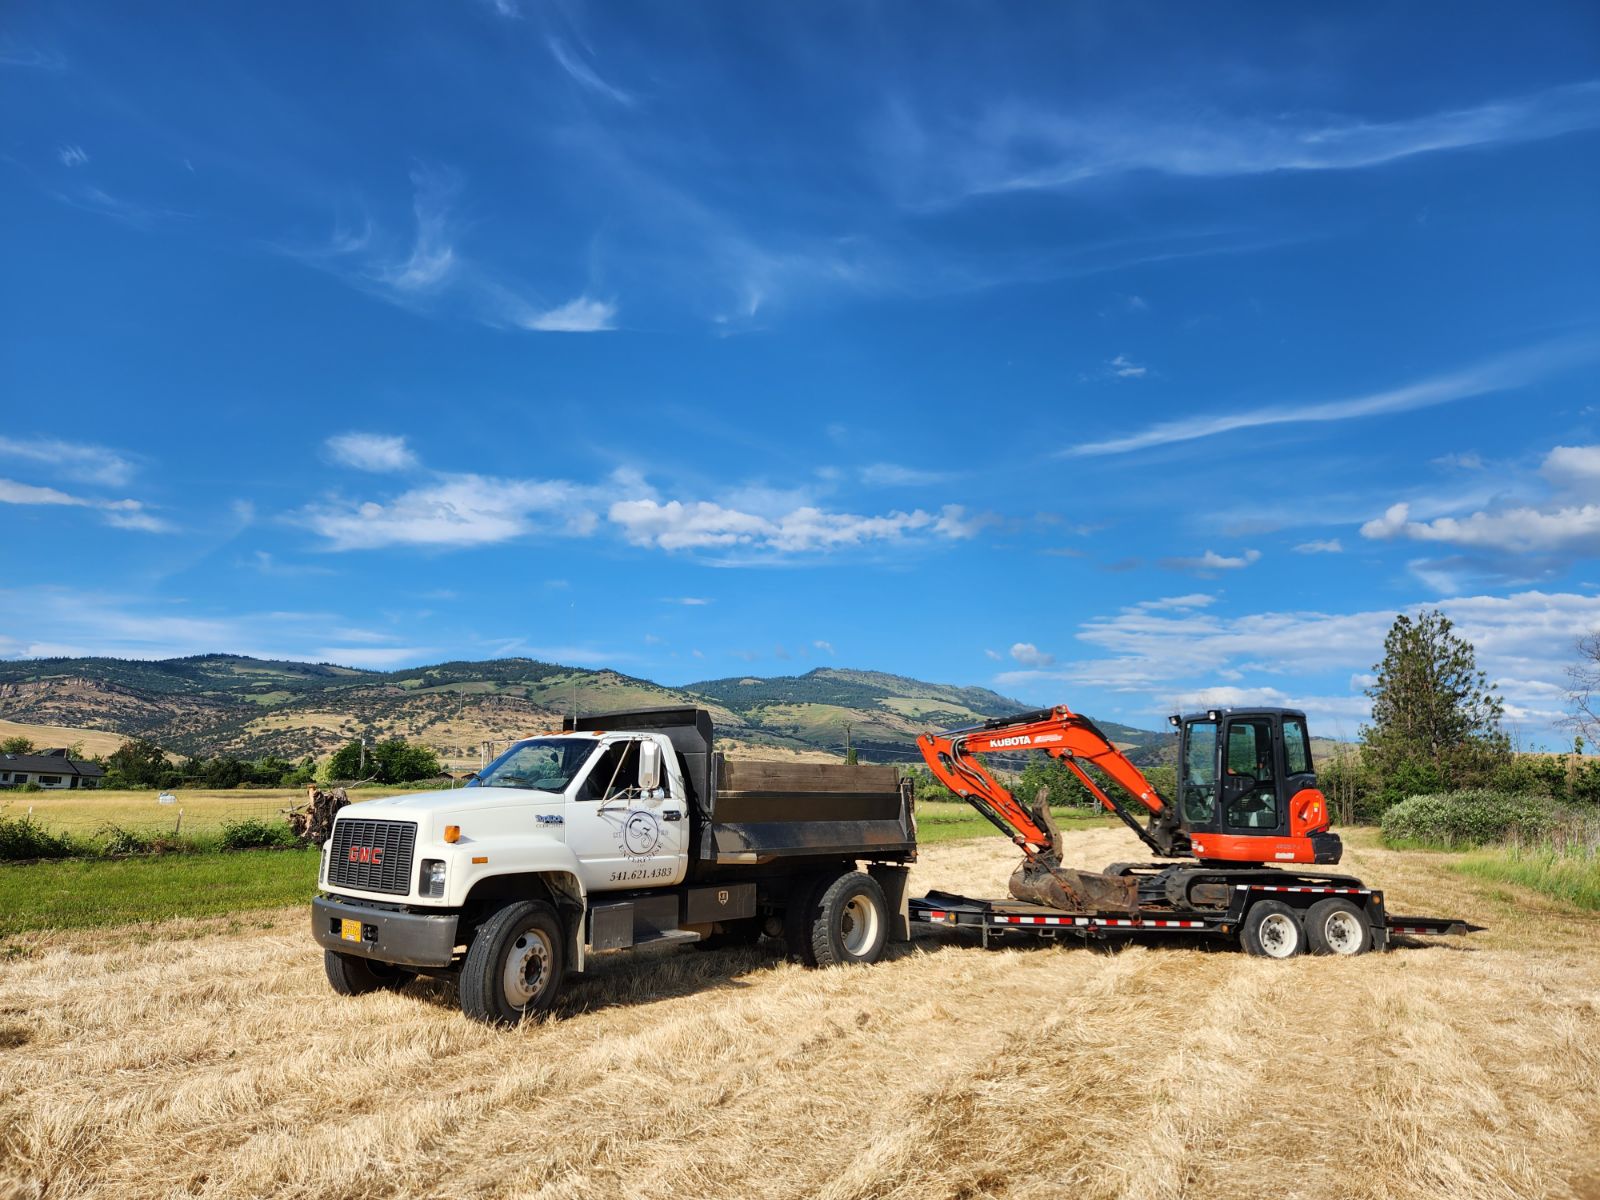 A 5-yard dump truck towing an excavator in Phoenix, Oregon